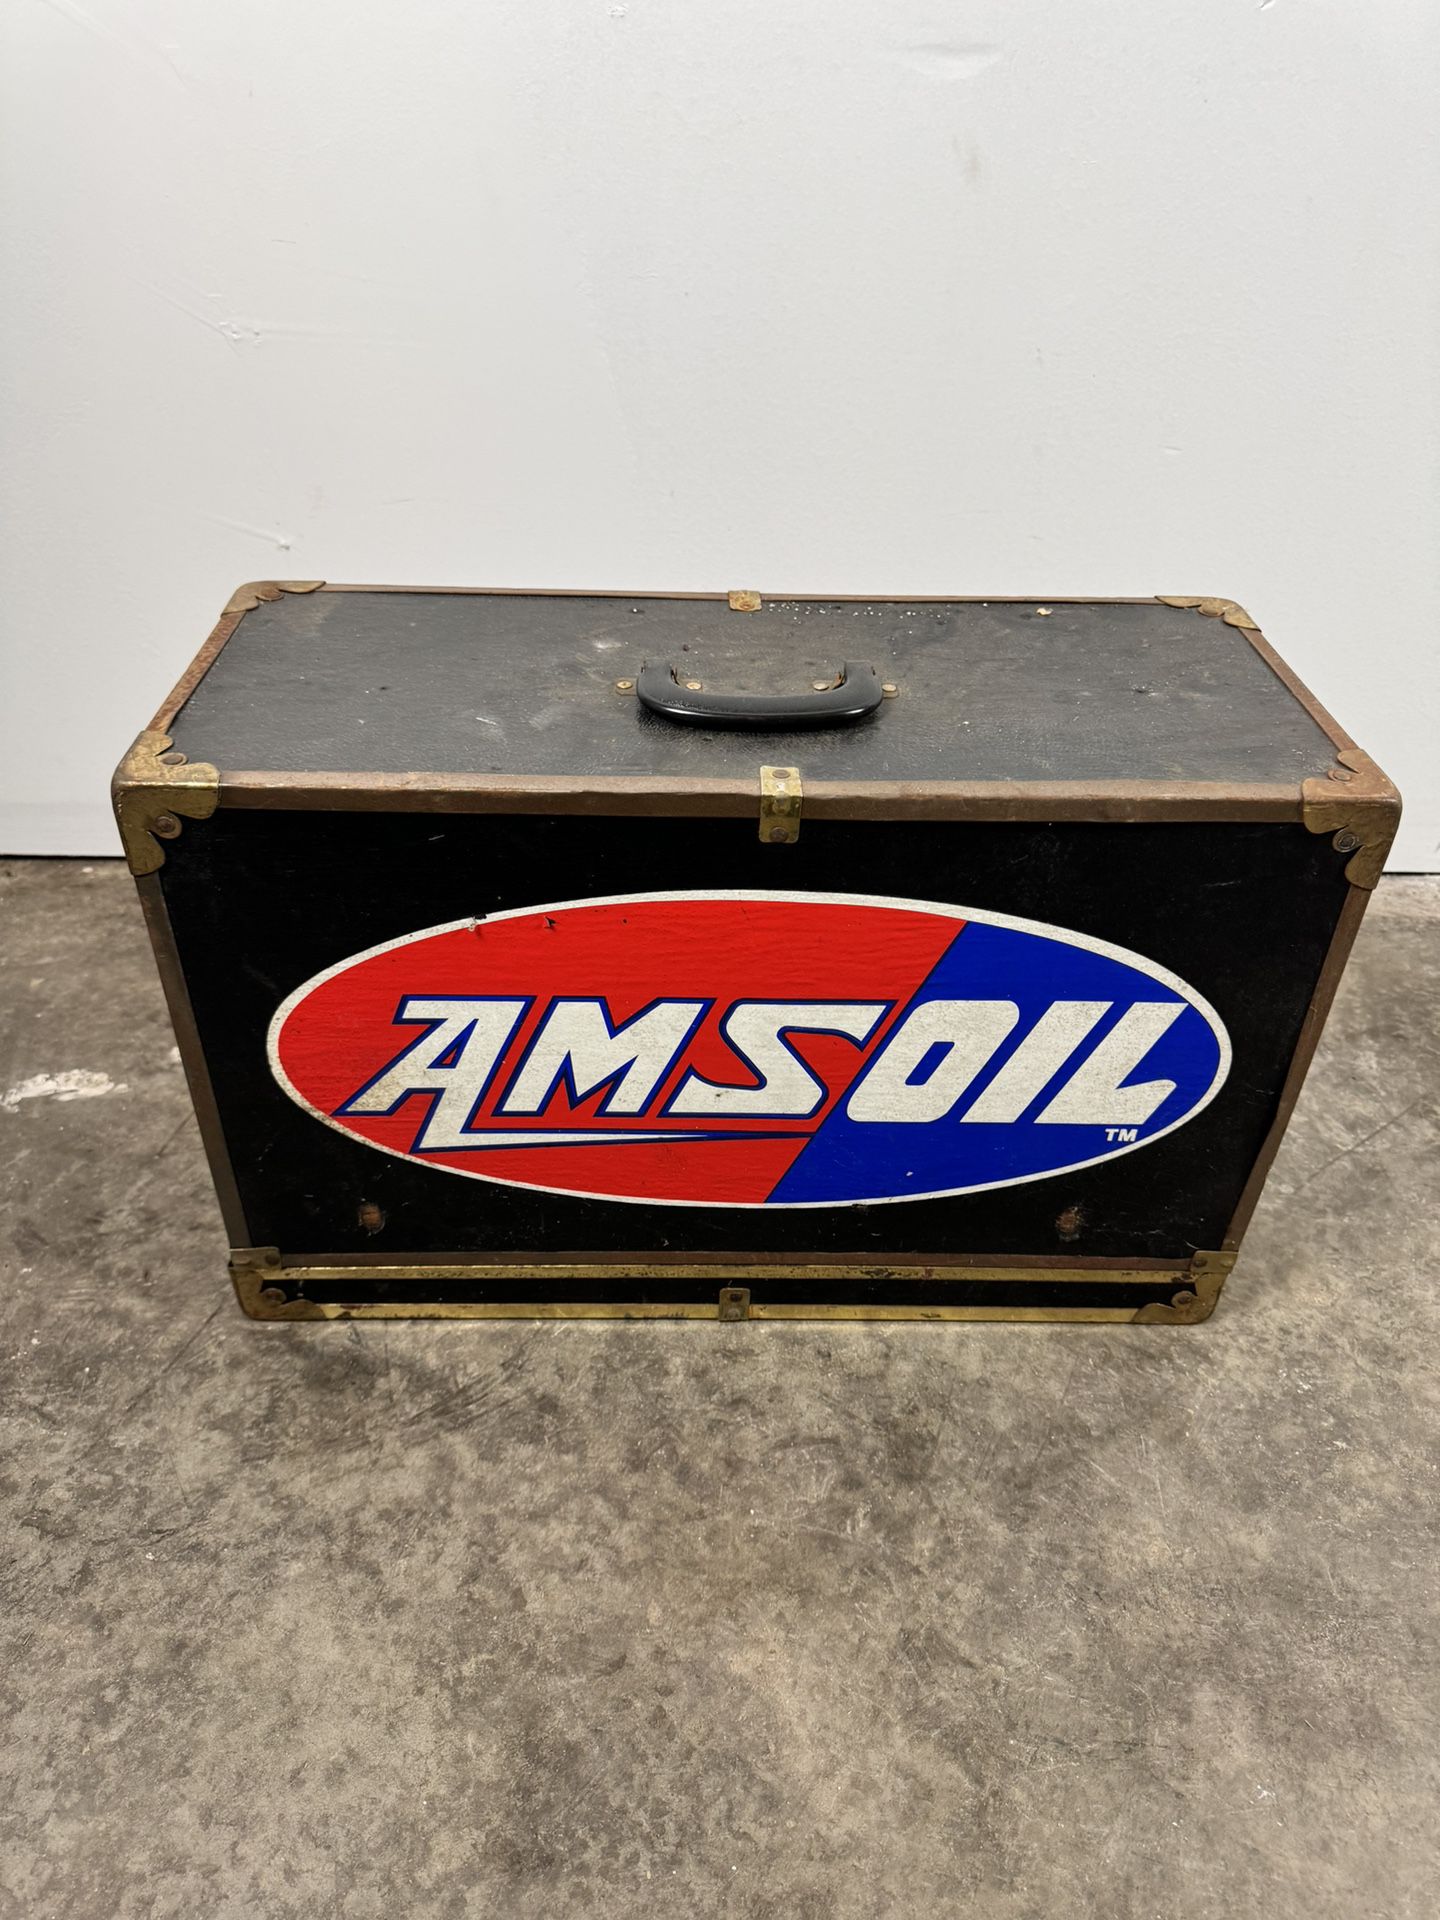 Vintage AMSOIL Dealer Demonstrator Salesman Sample Gas & Oil Advertising Display